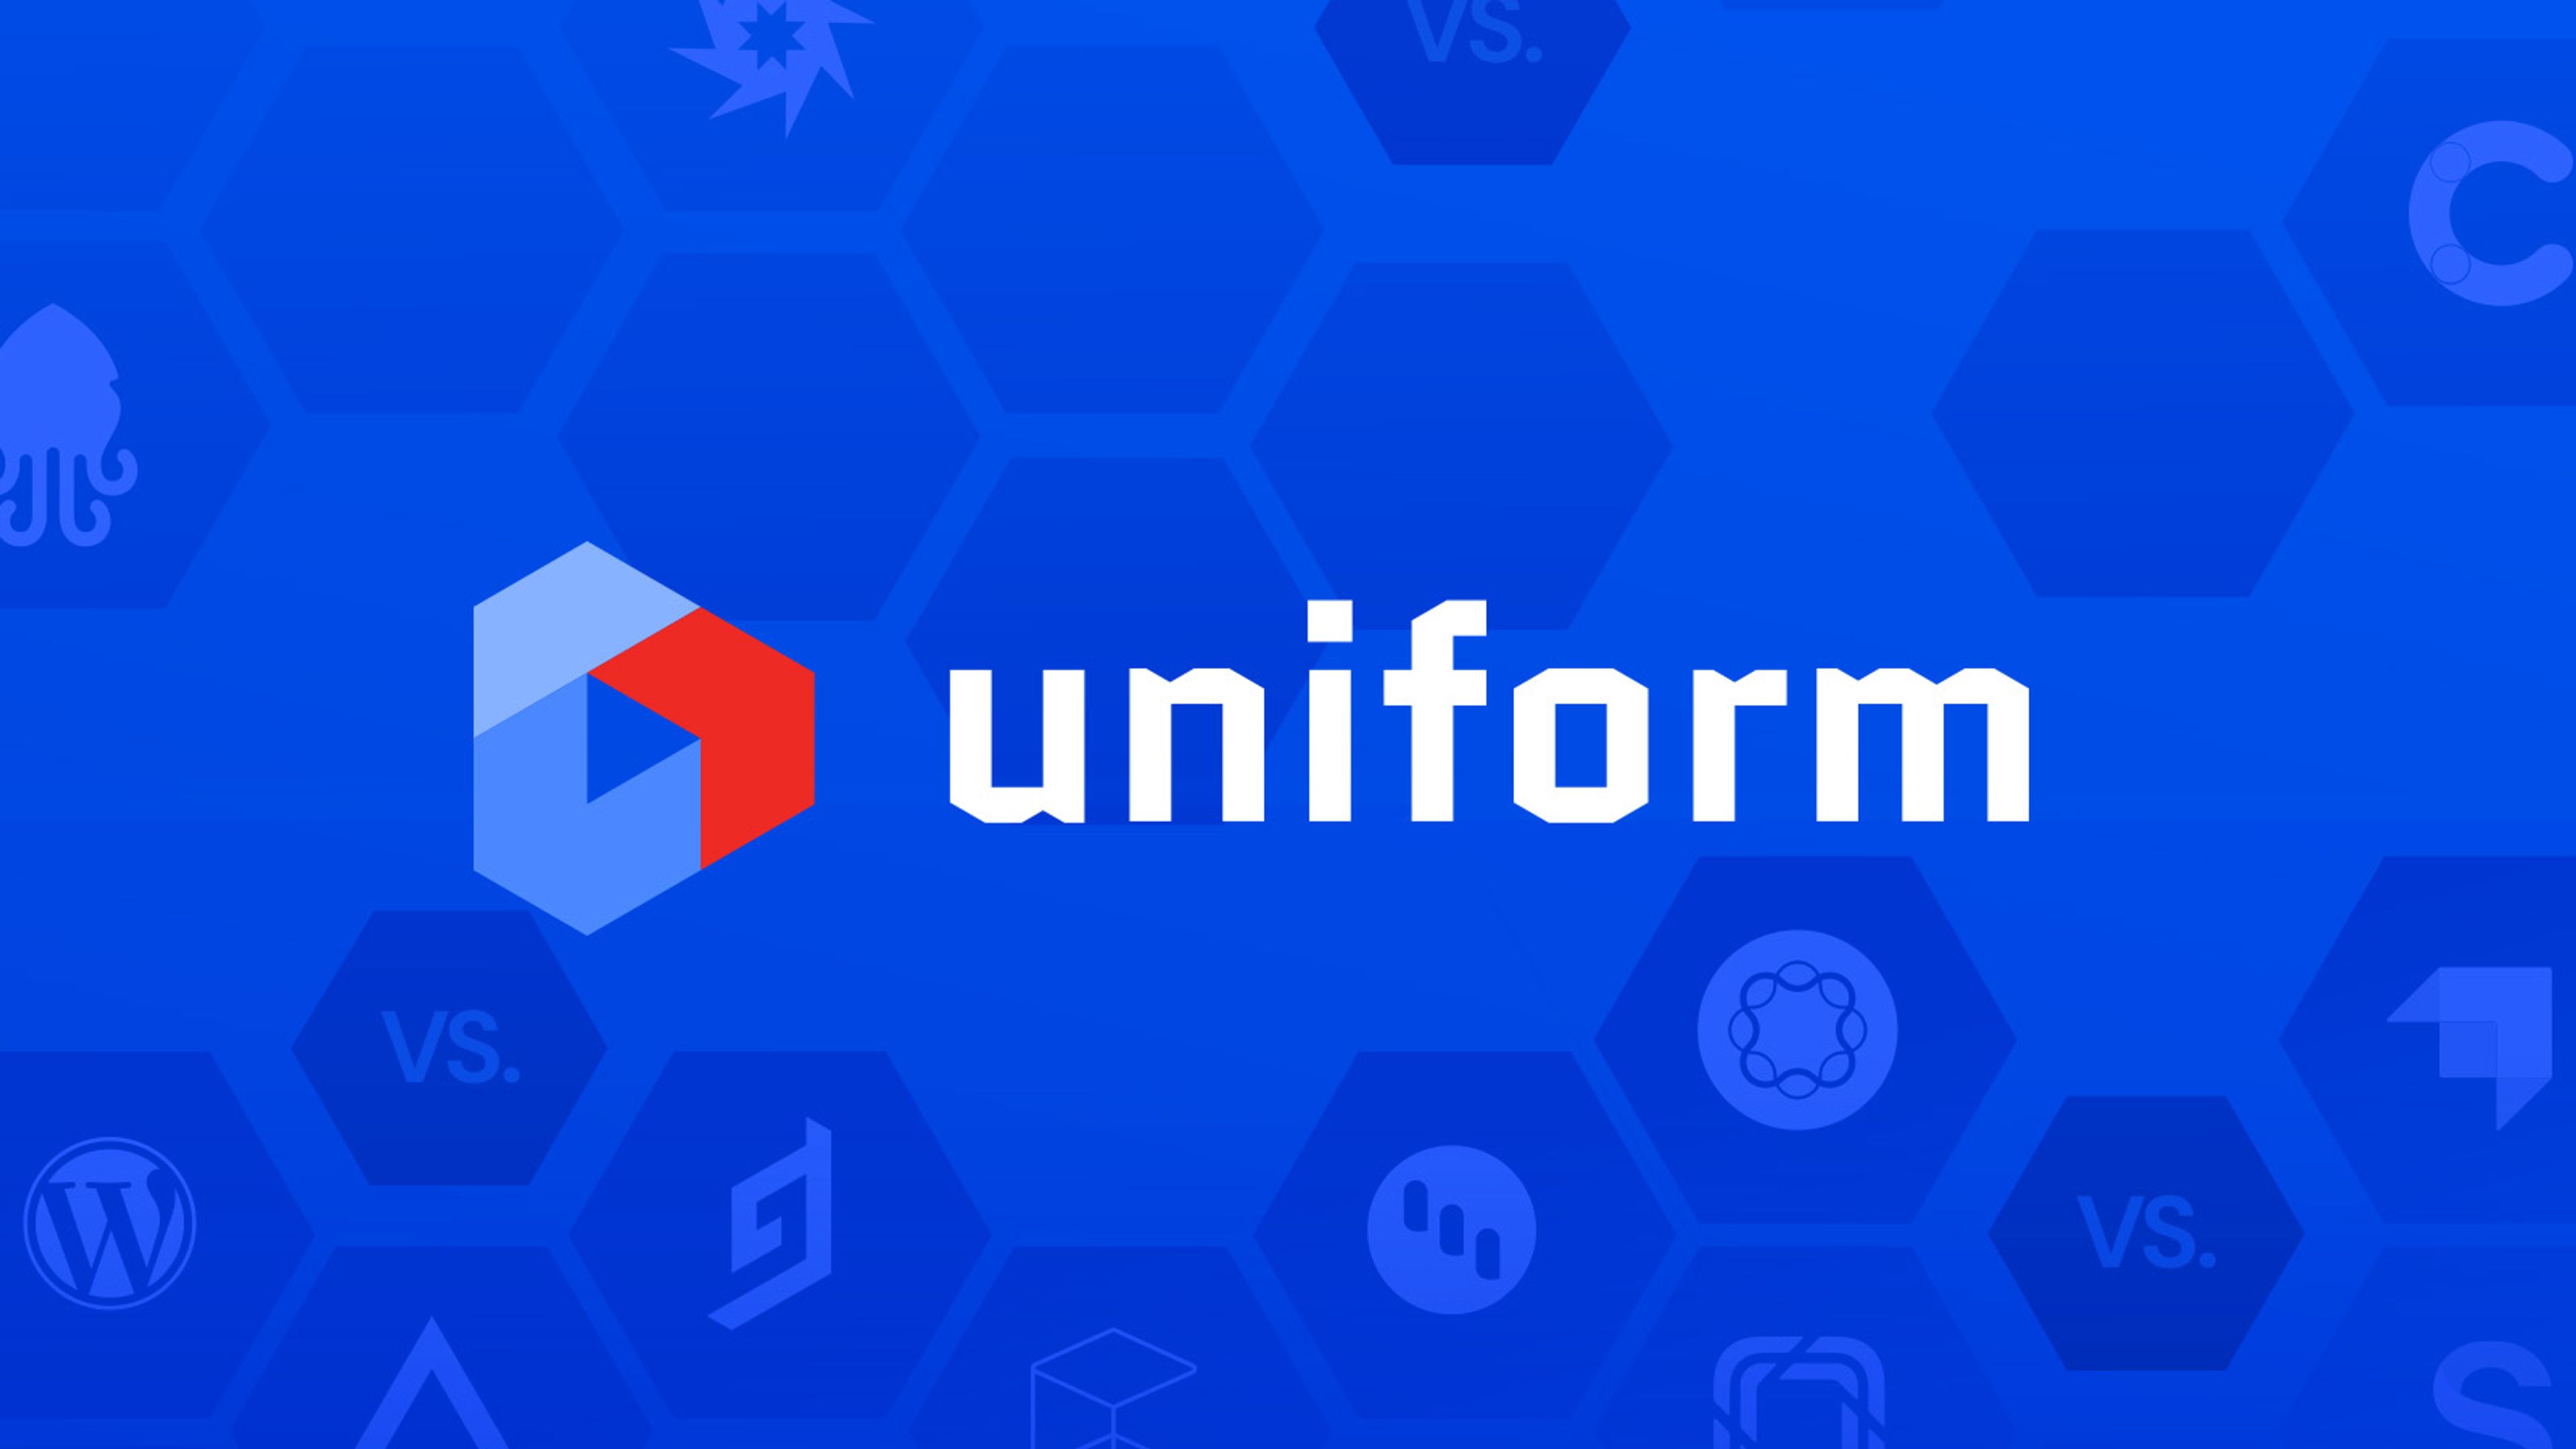 Uniform logo against a blue background featuring logos of various CMS platforms